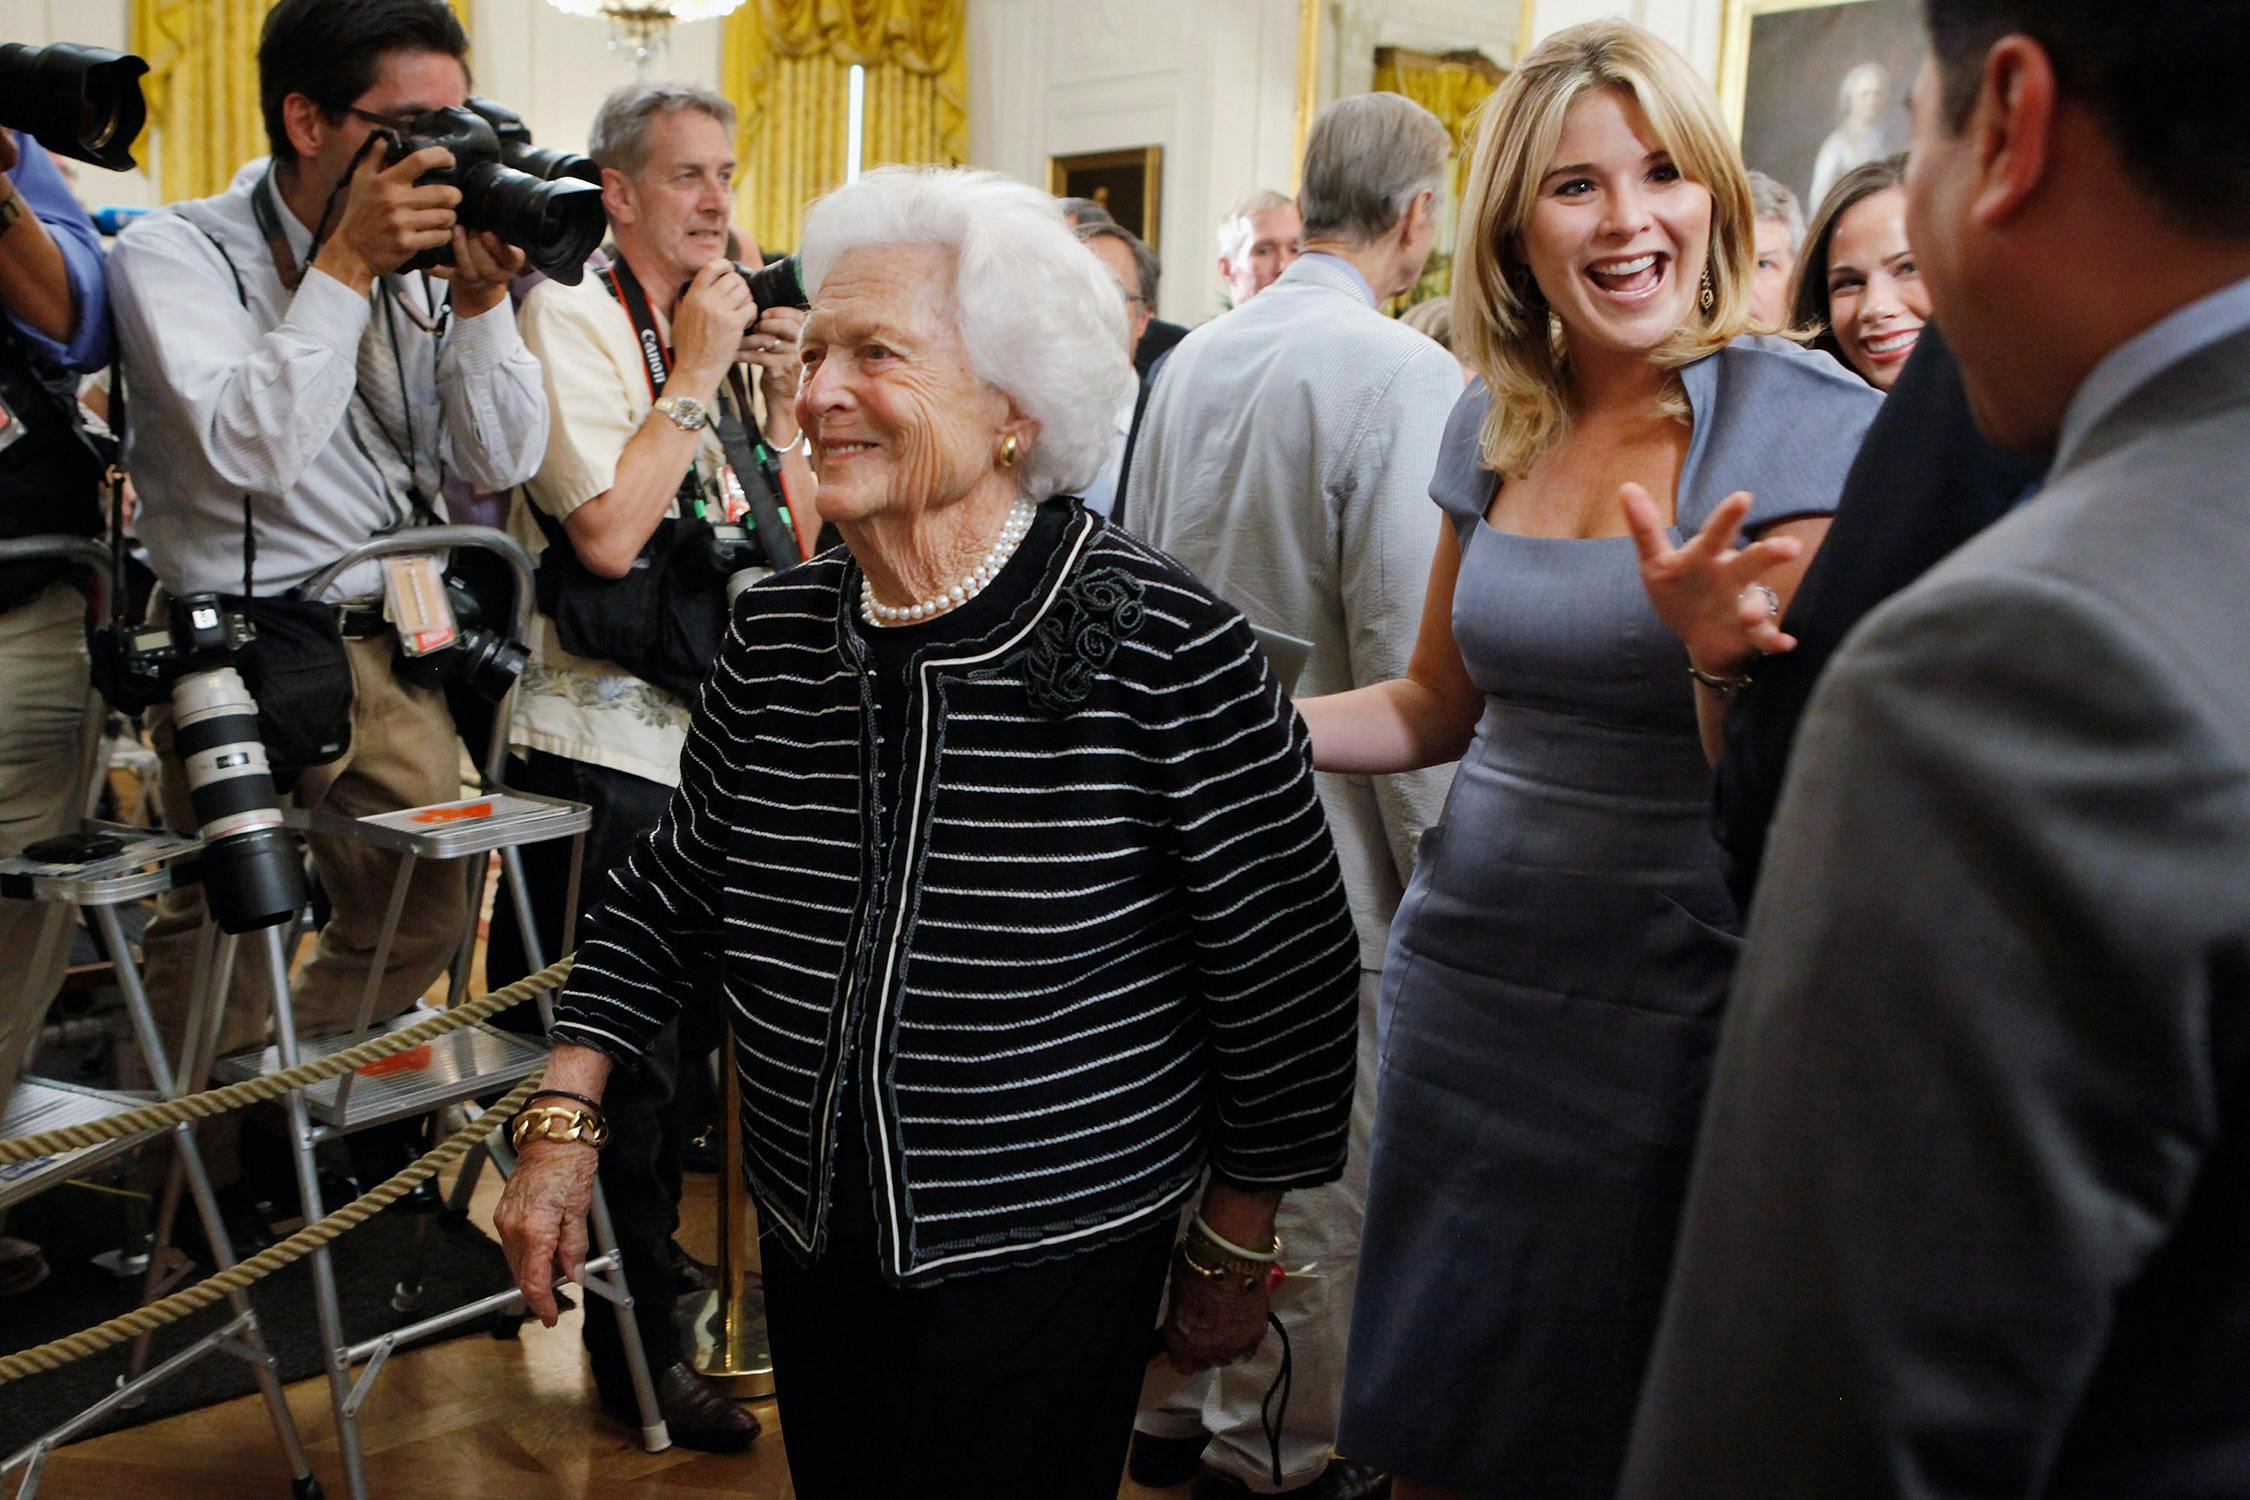 Barbara Bush and granddaughter Jenna Bush Hager walking through a crowd at the White House